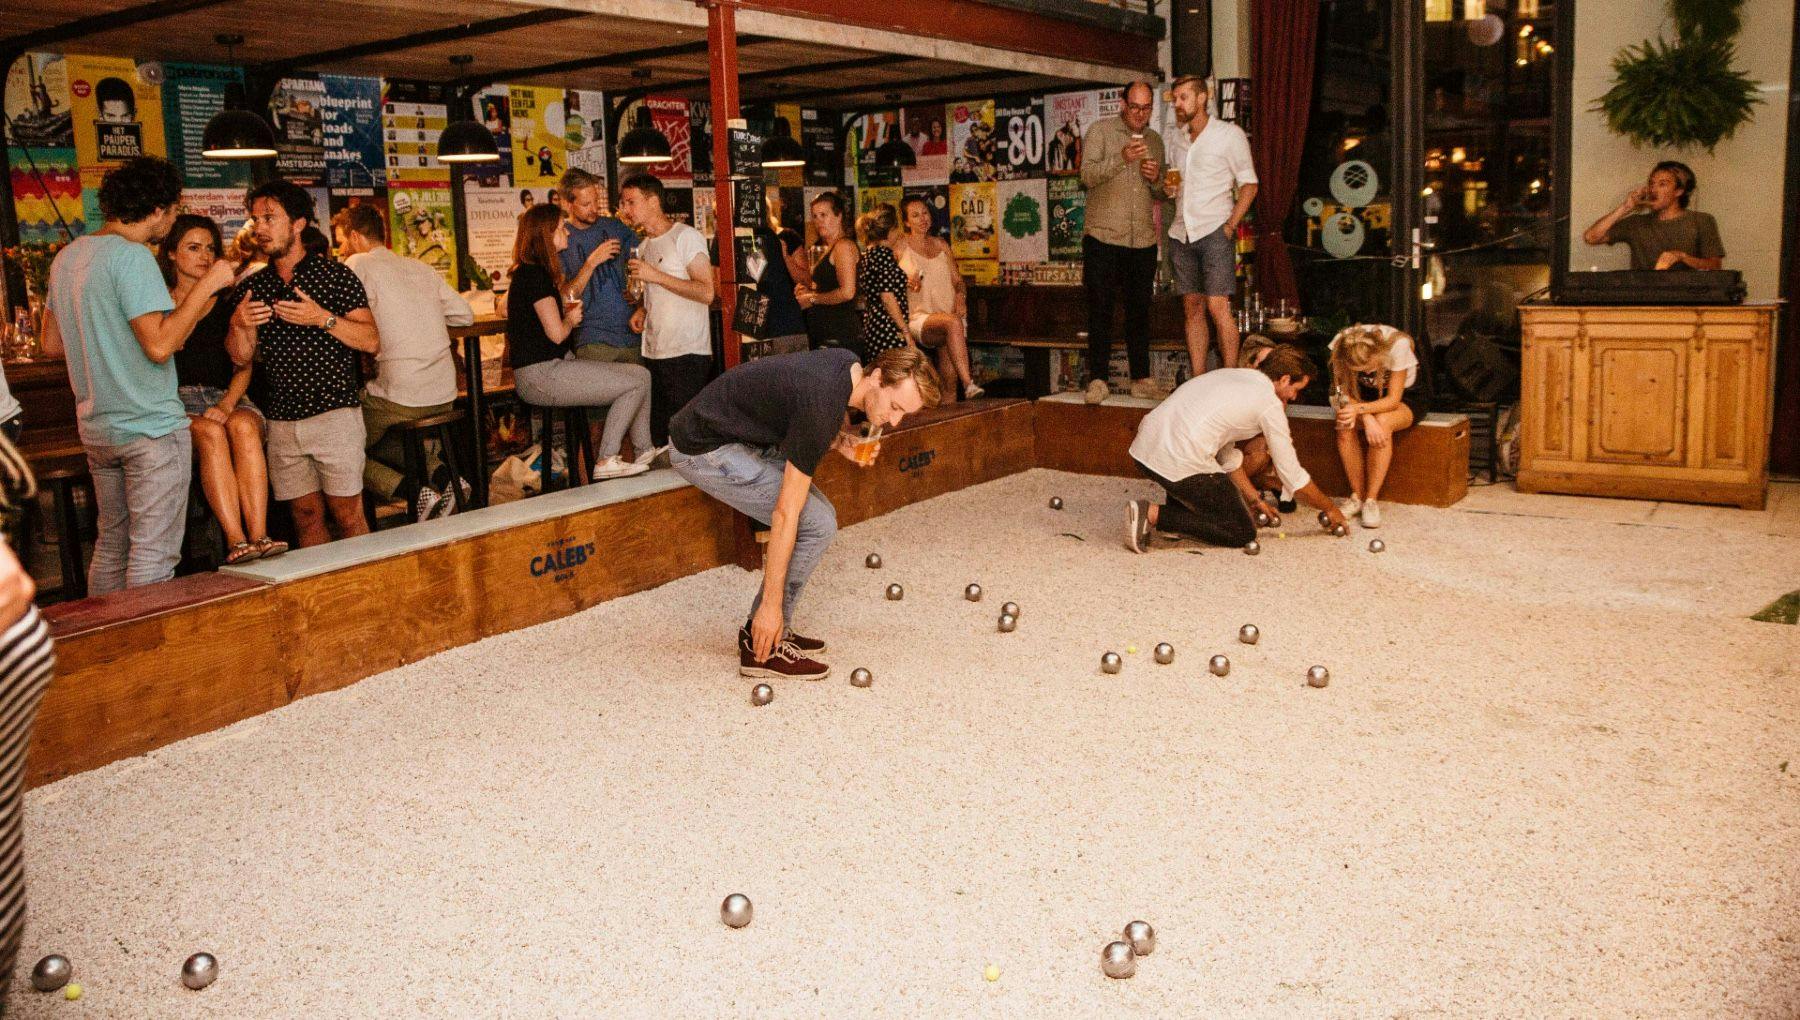 Mooie Boules people playing jeu de boules